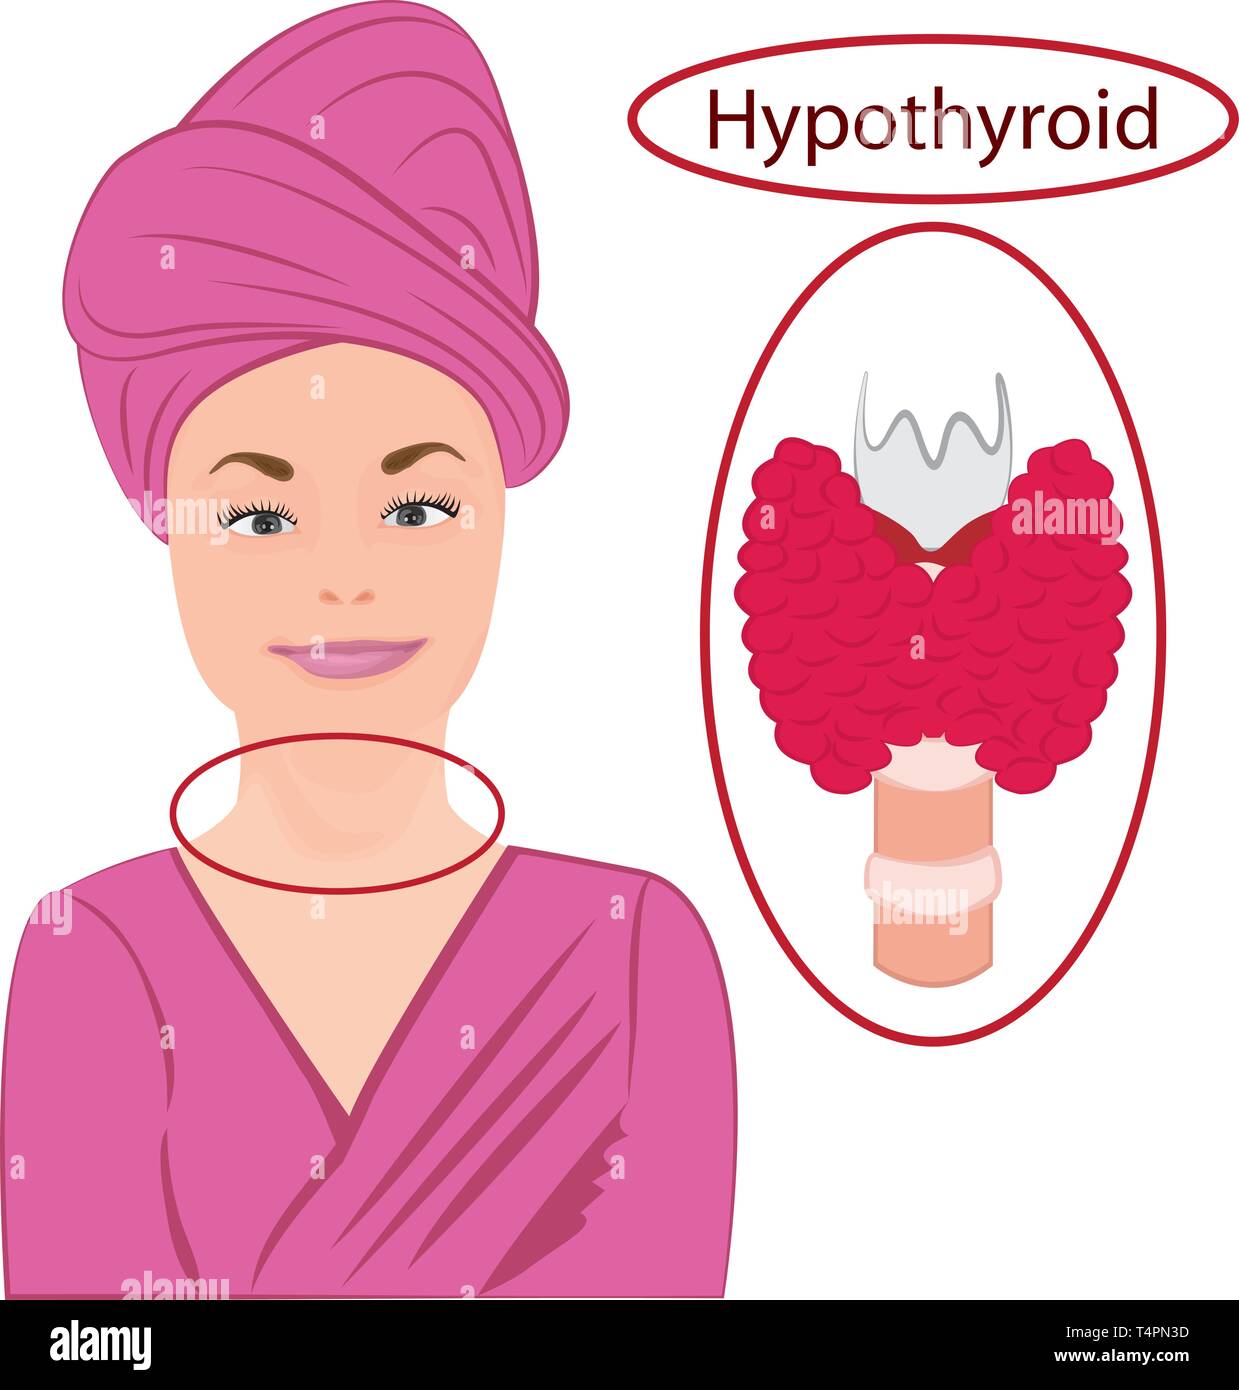 Goiter Enlarged Thyroid Endocrine Disfunction Vector Illustration On